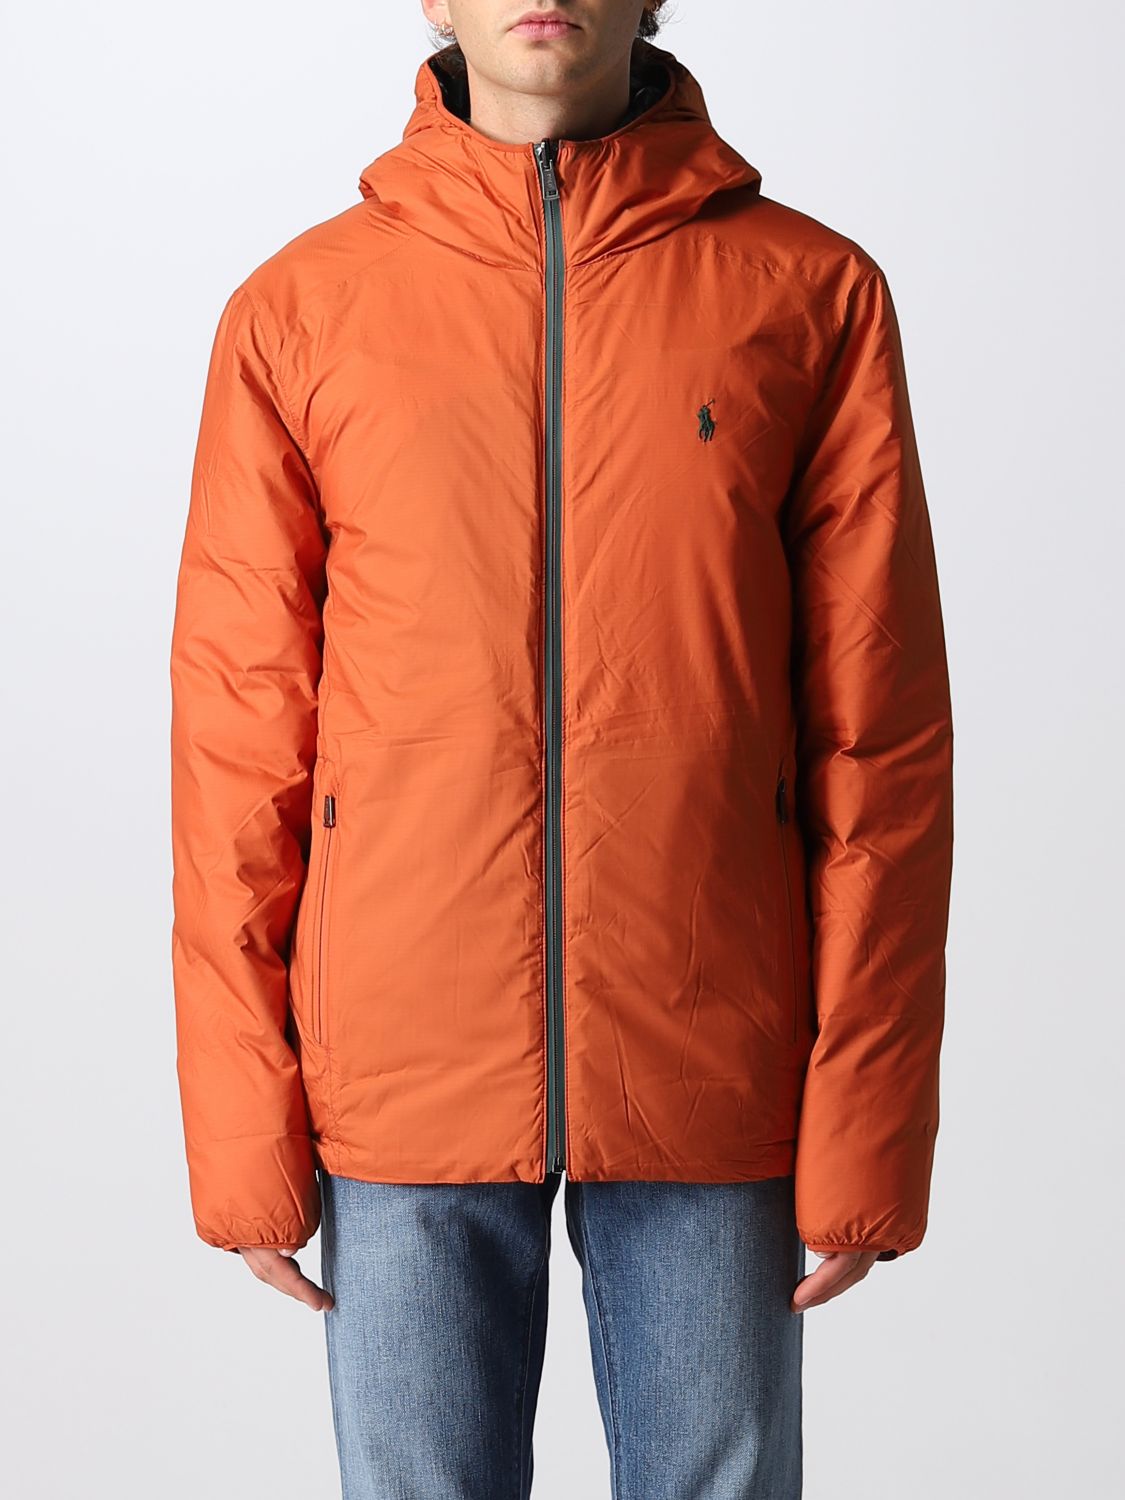 POLO RALPH LAUREN: jacket for man - Orange | Polo Ralph Lauren jacket 710877354 on GIGLIO.COM